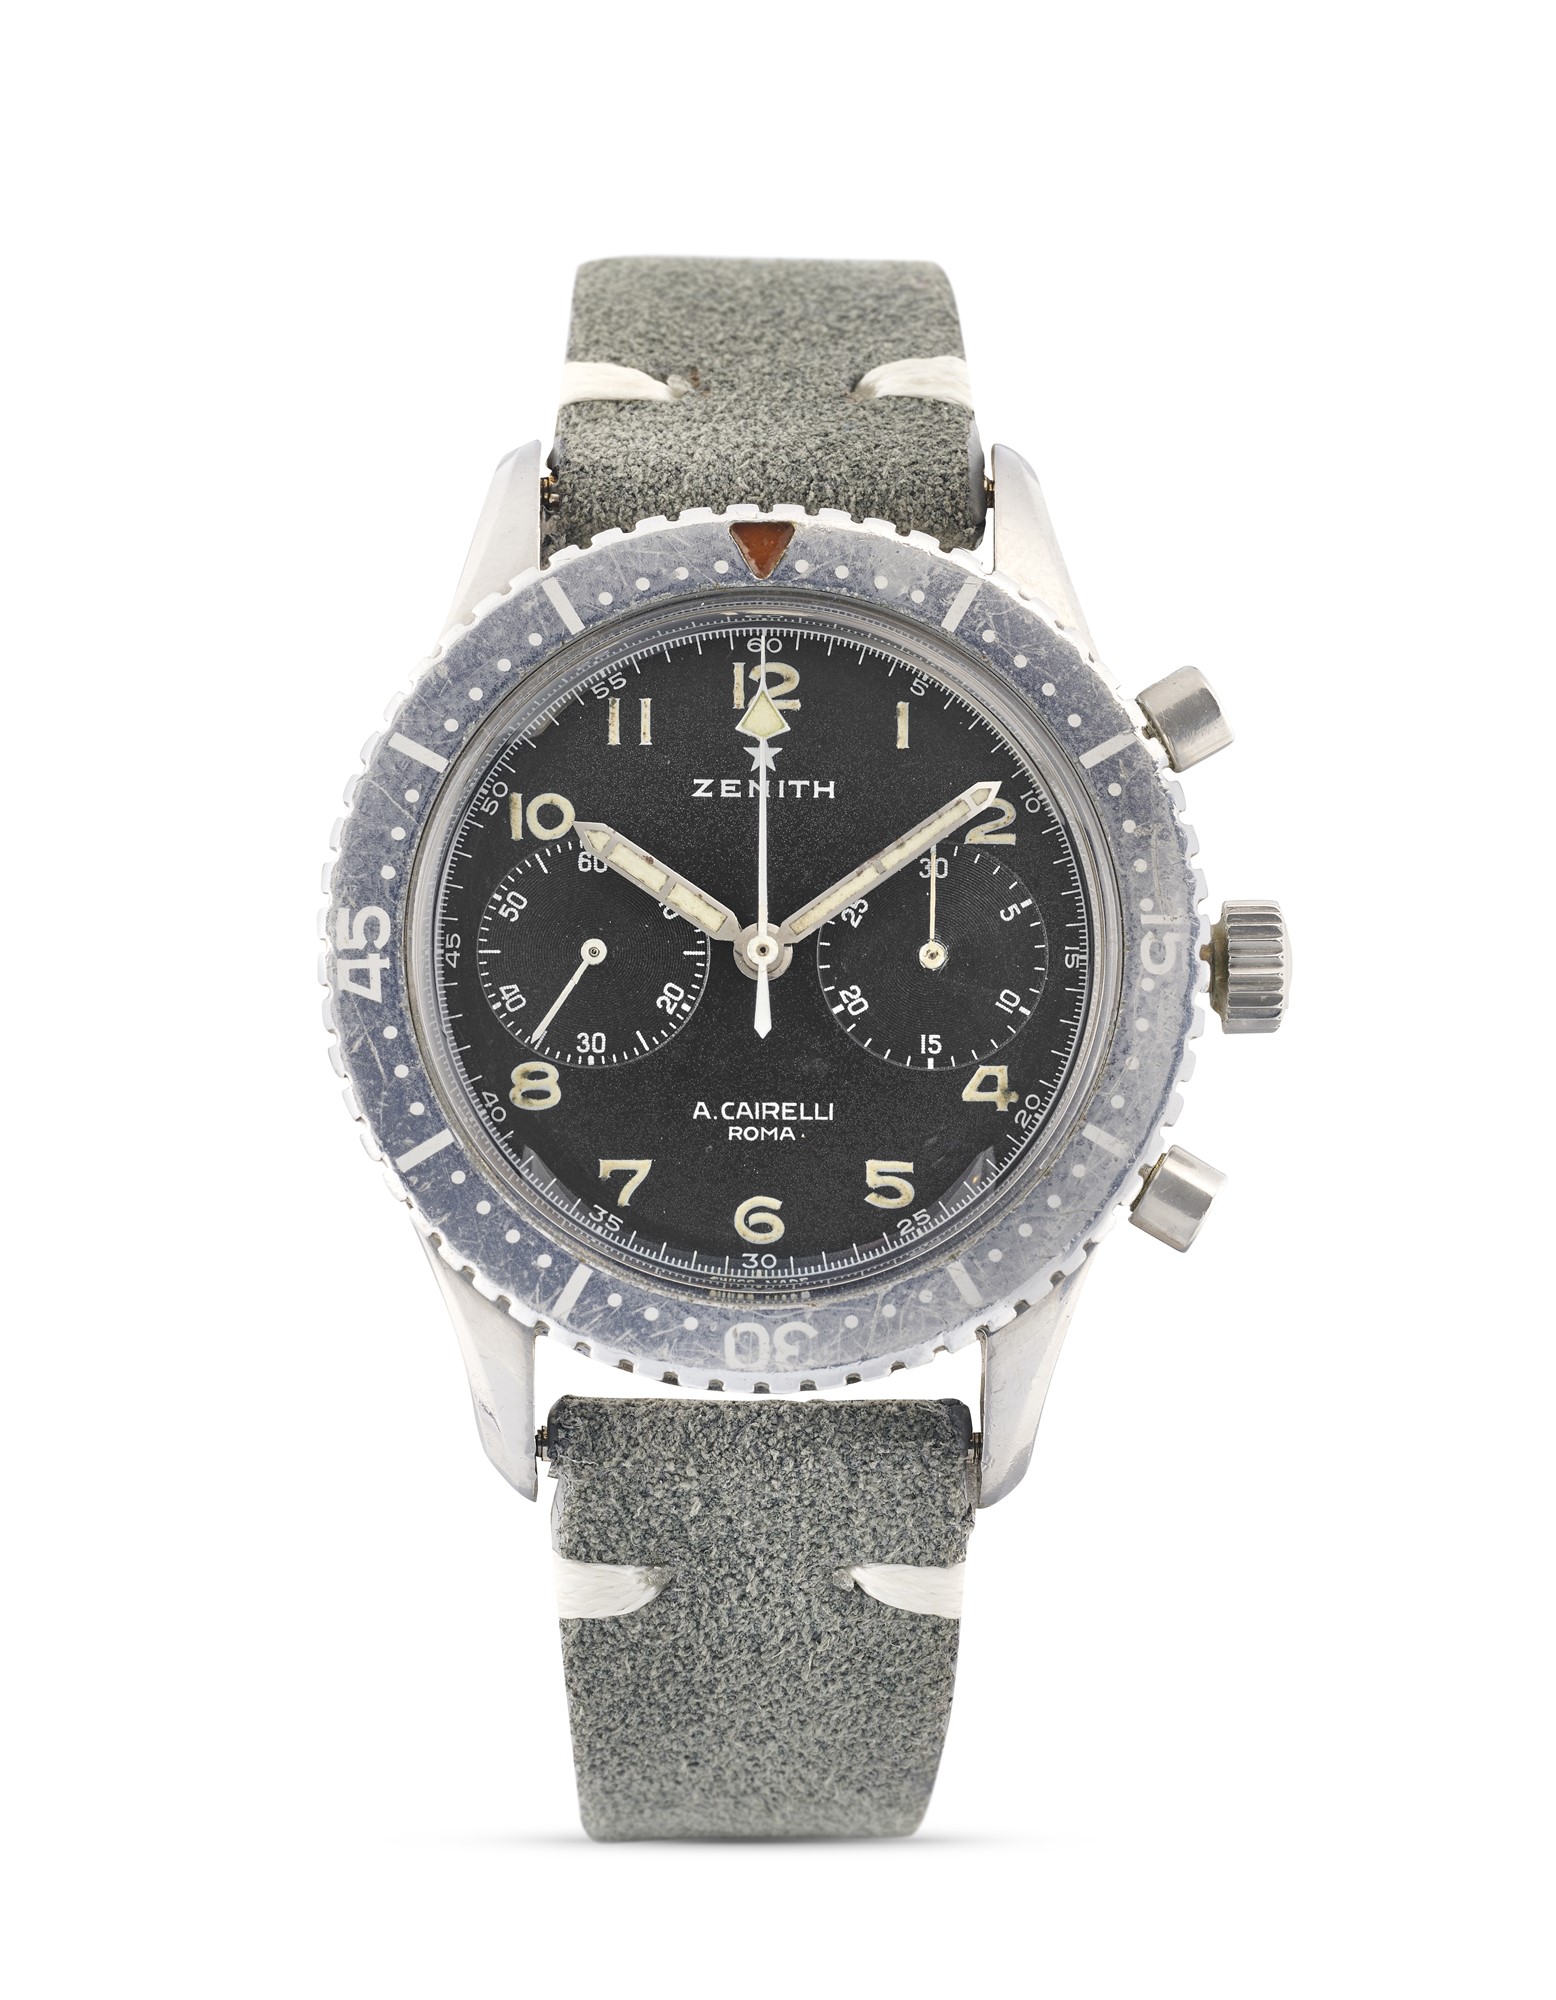 Zenith Cairelli Tipo CP-2 military chronograph, 70s